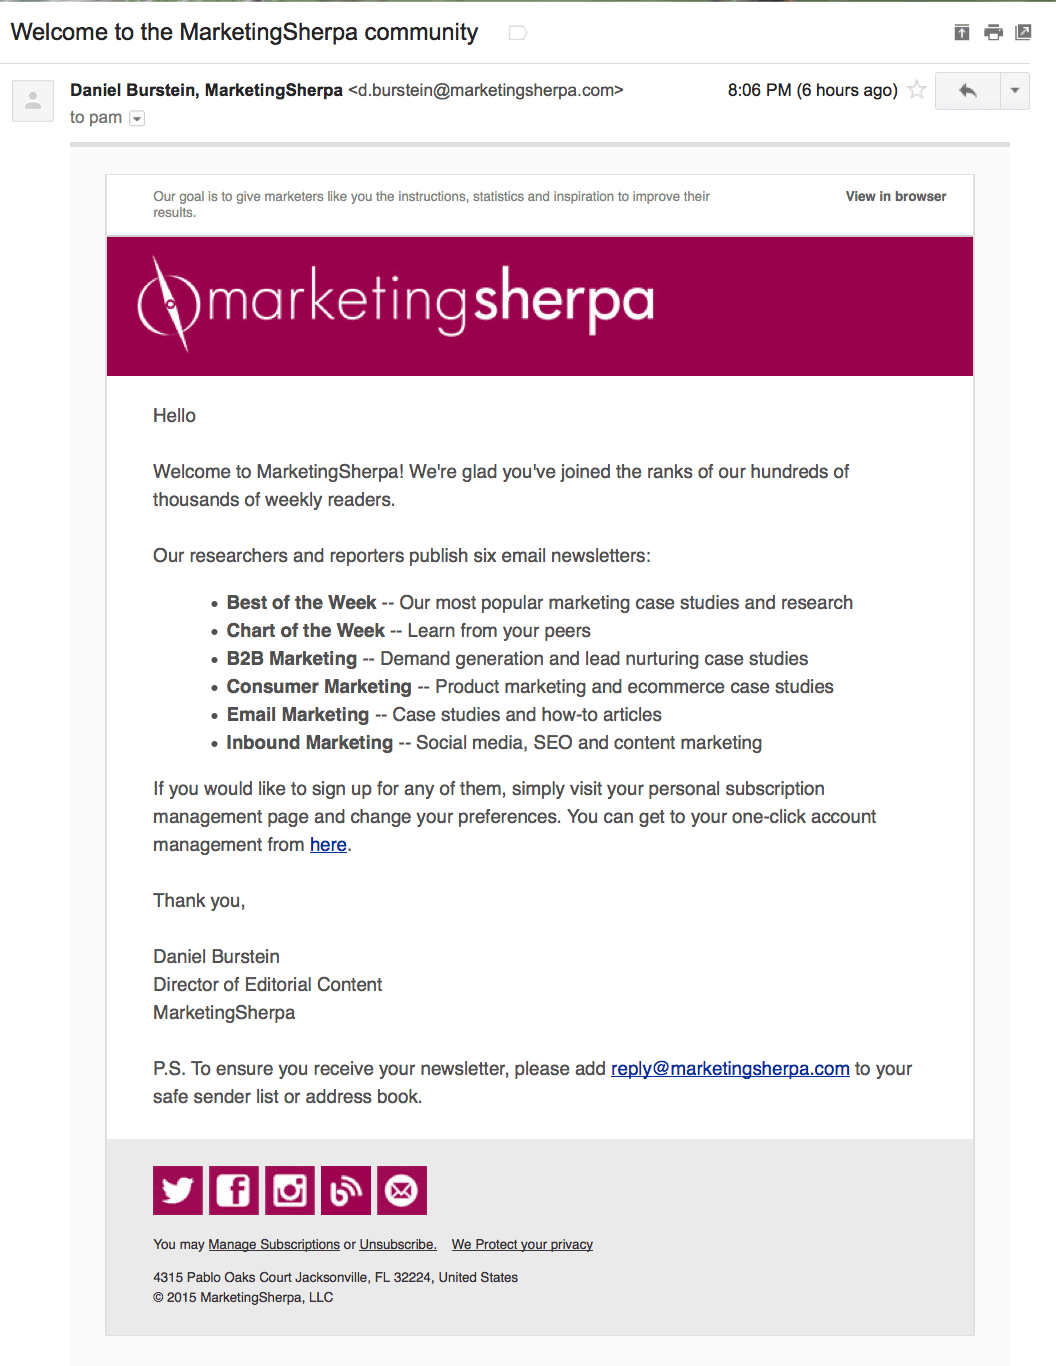 Welcome message - MarketingSherpa